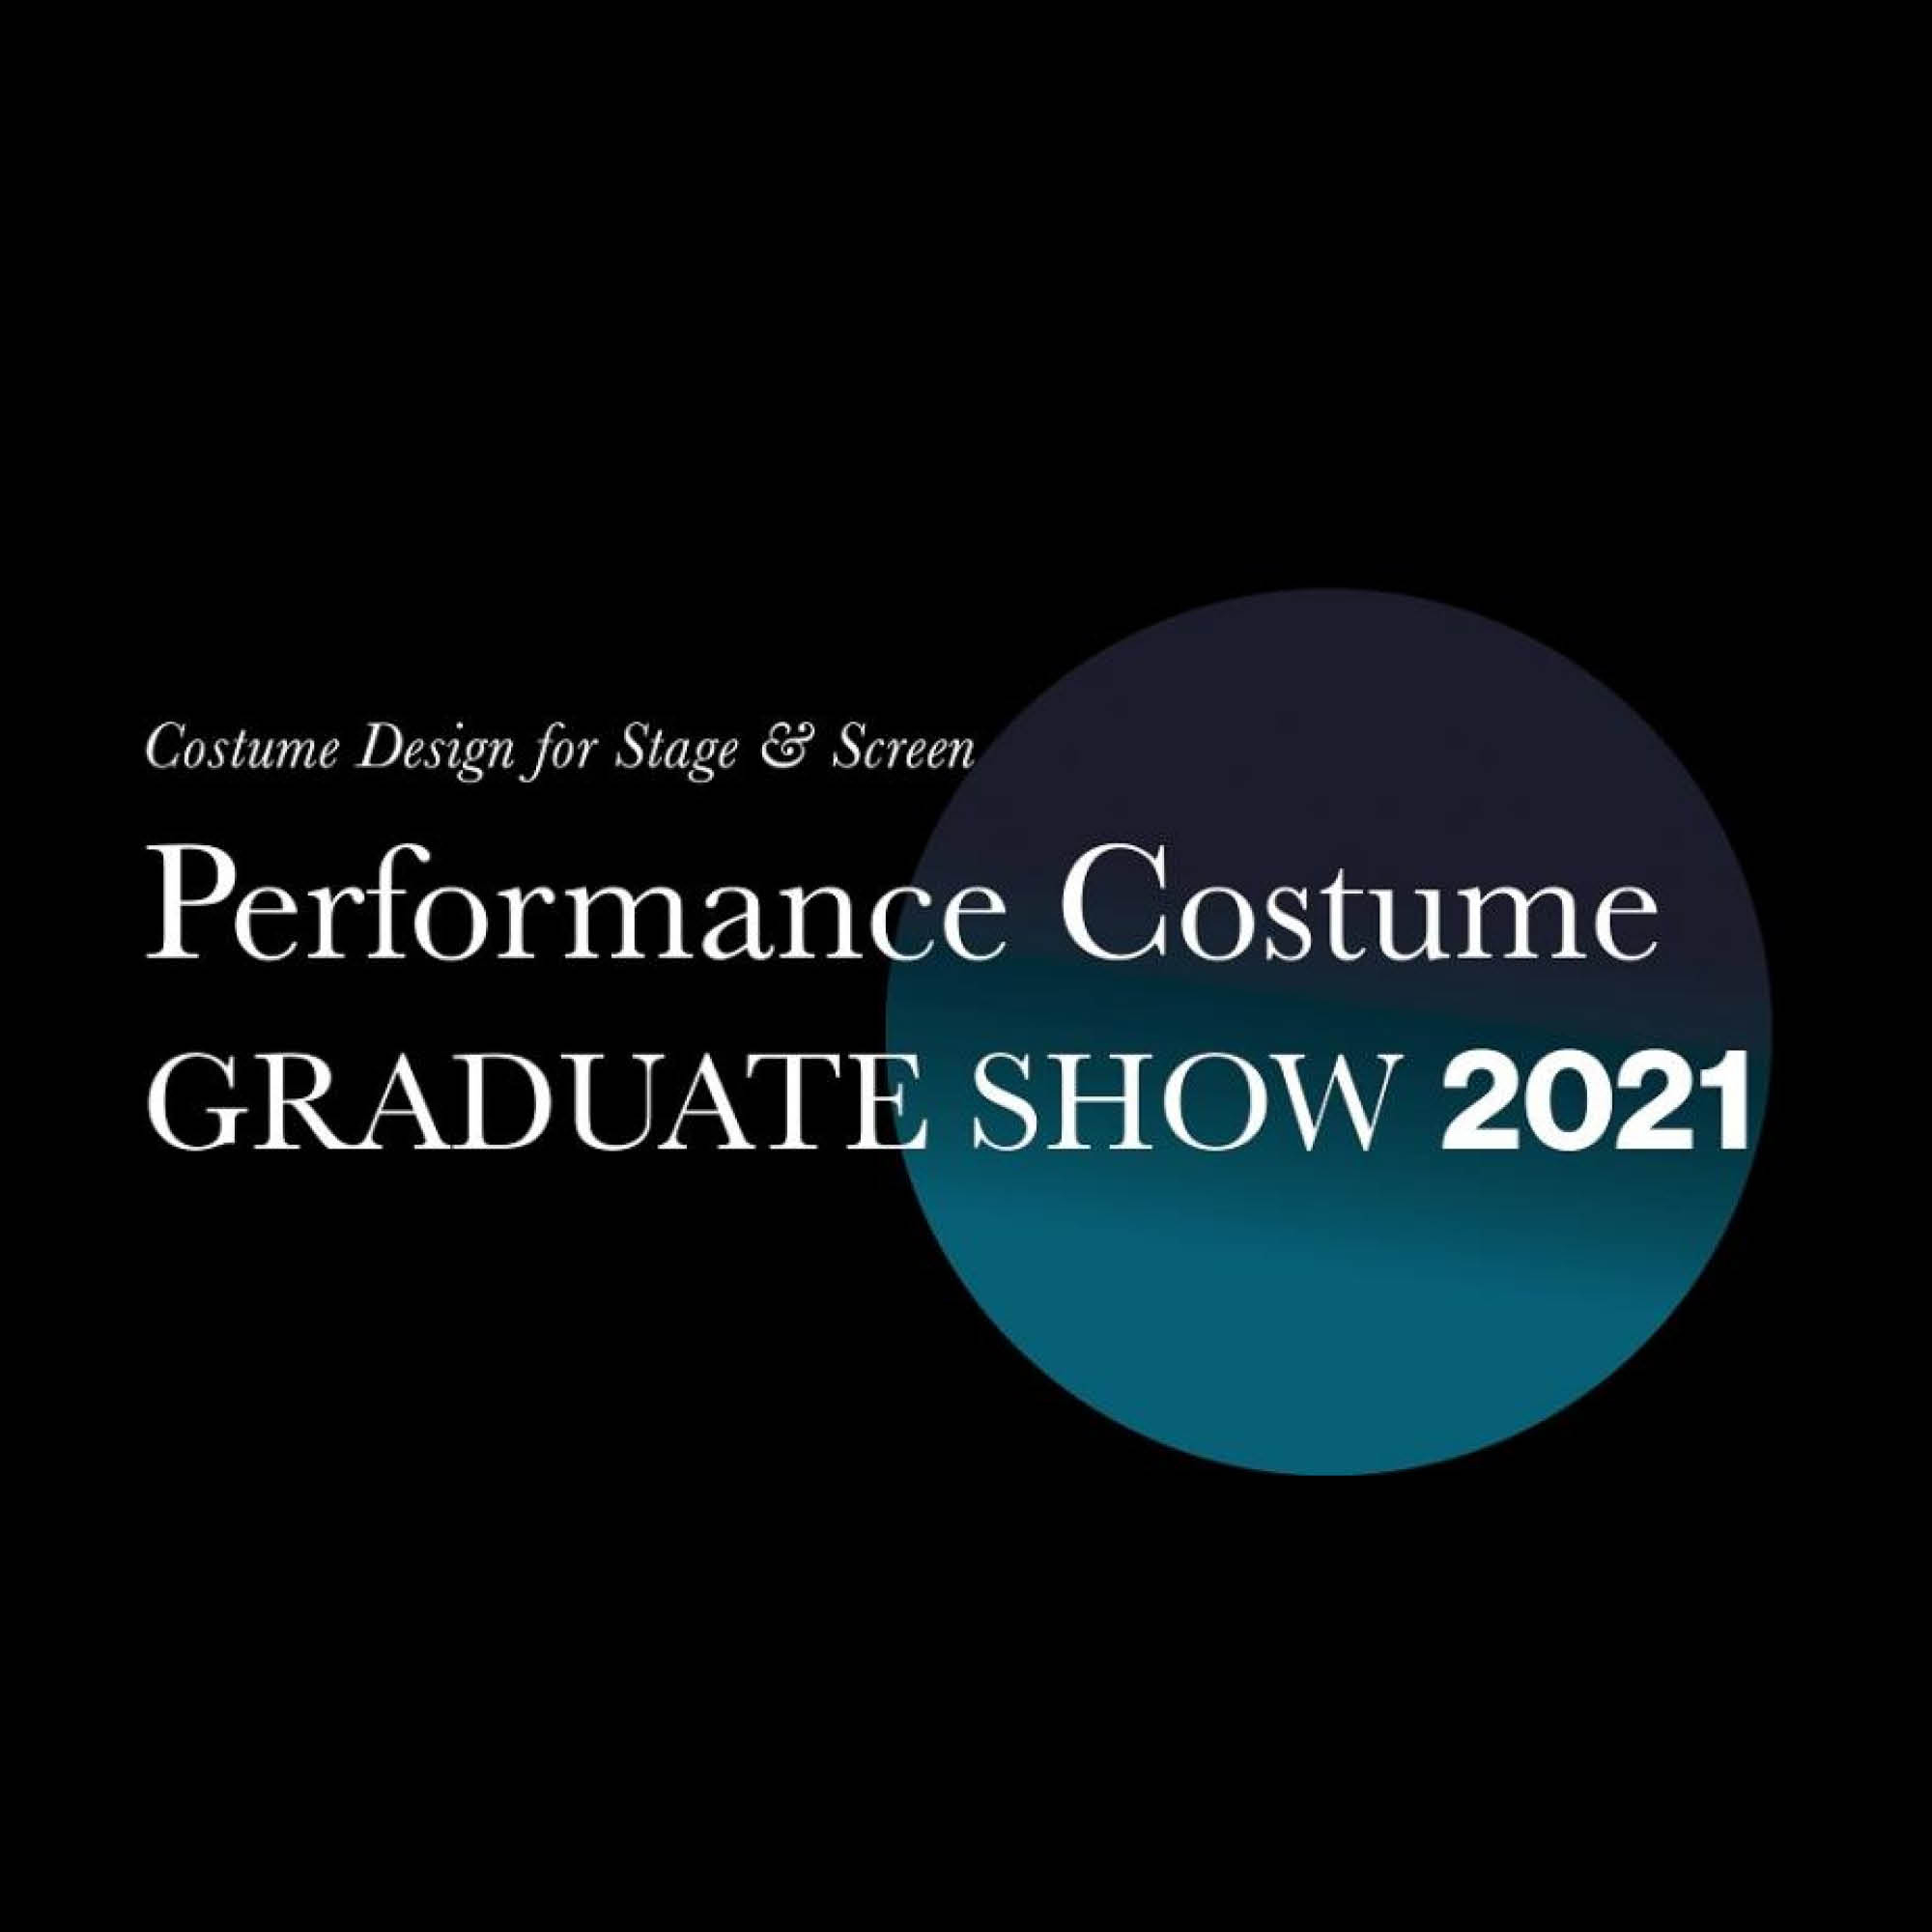 Performance Costume Graduate Show 2021